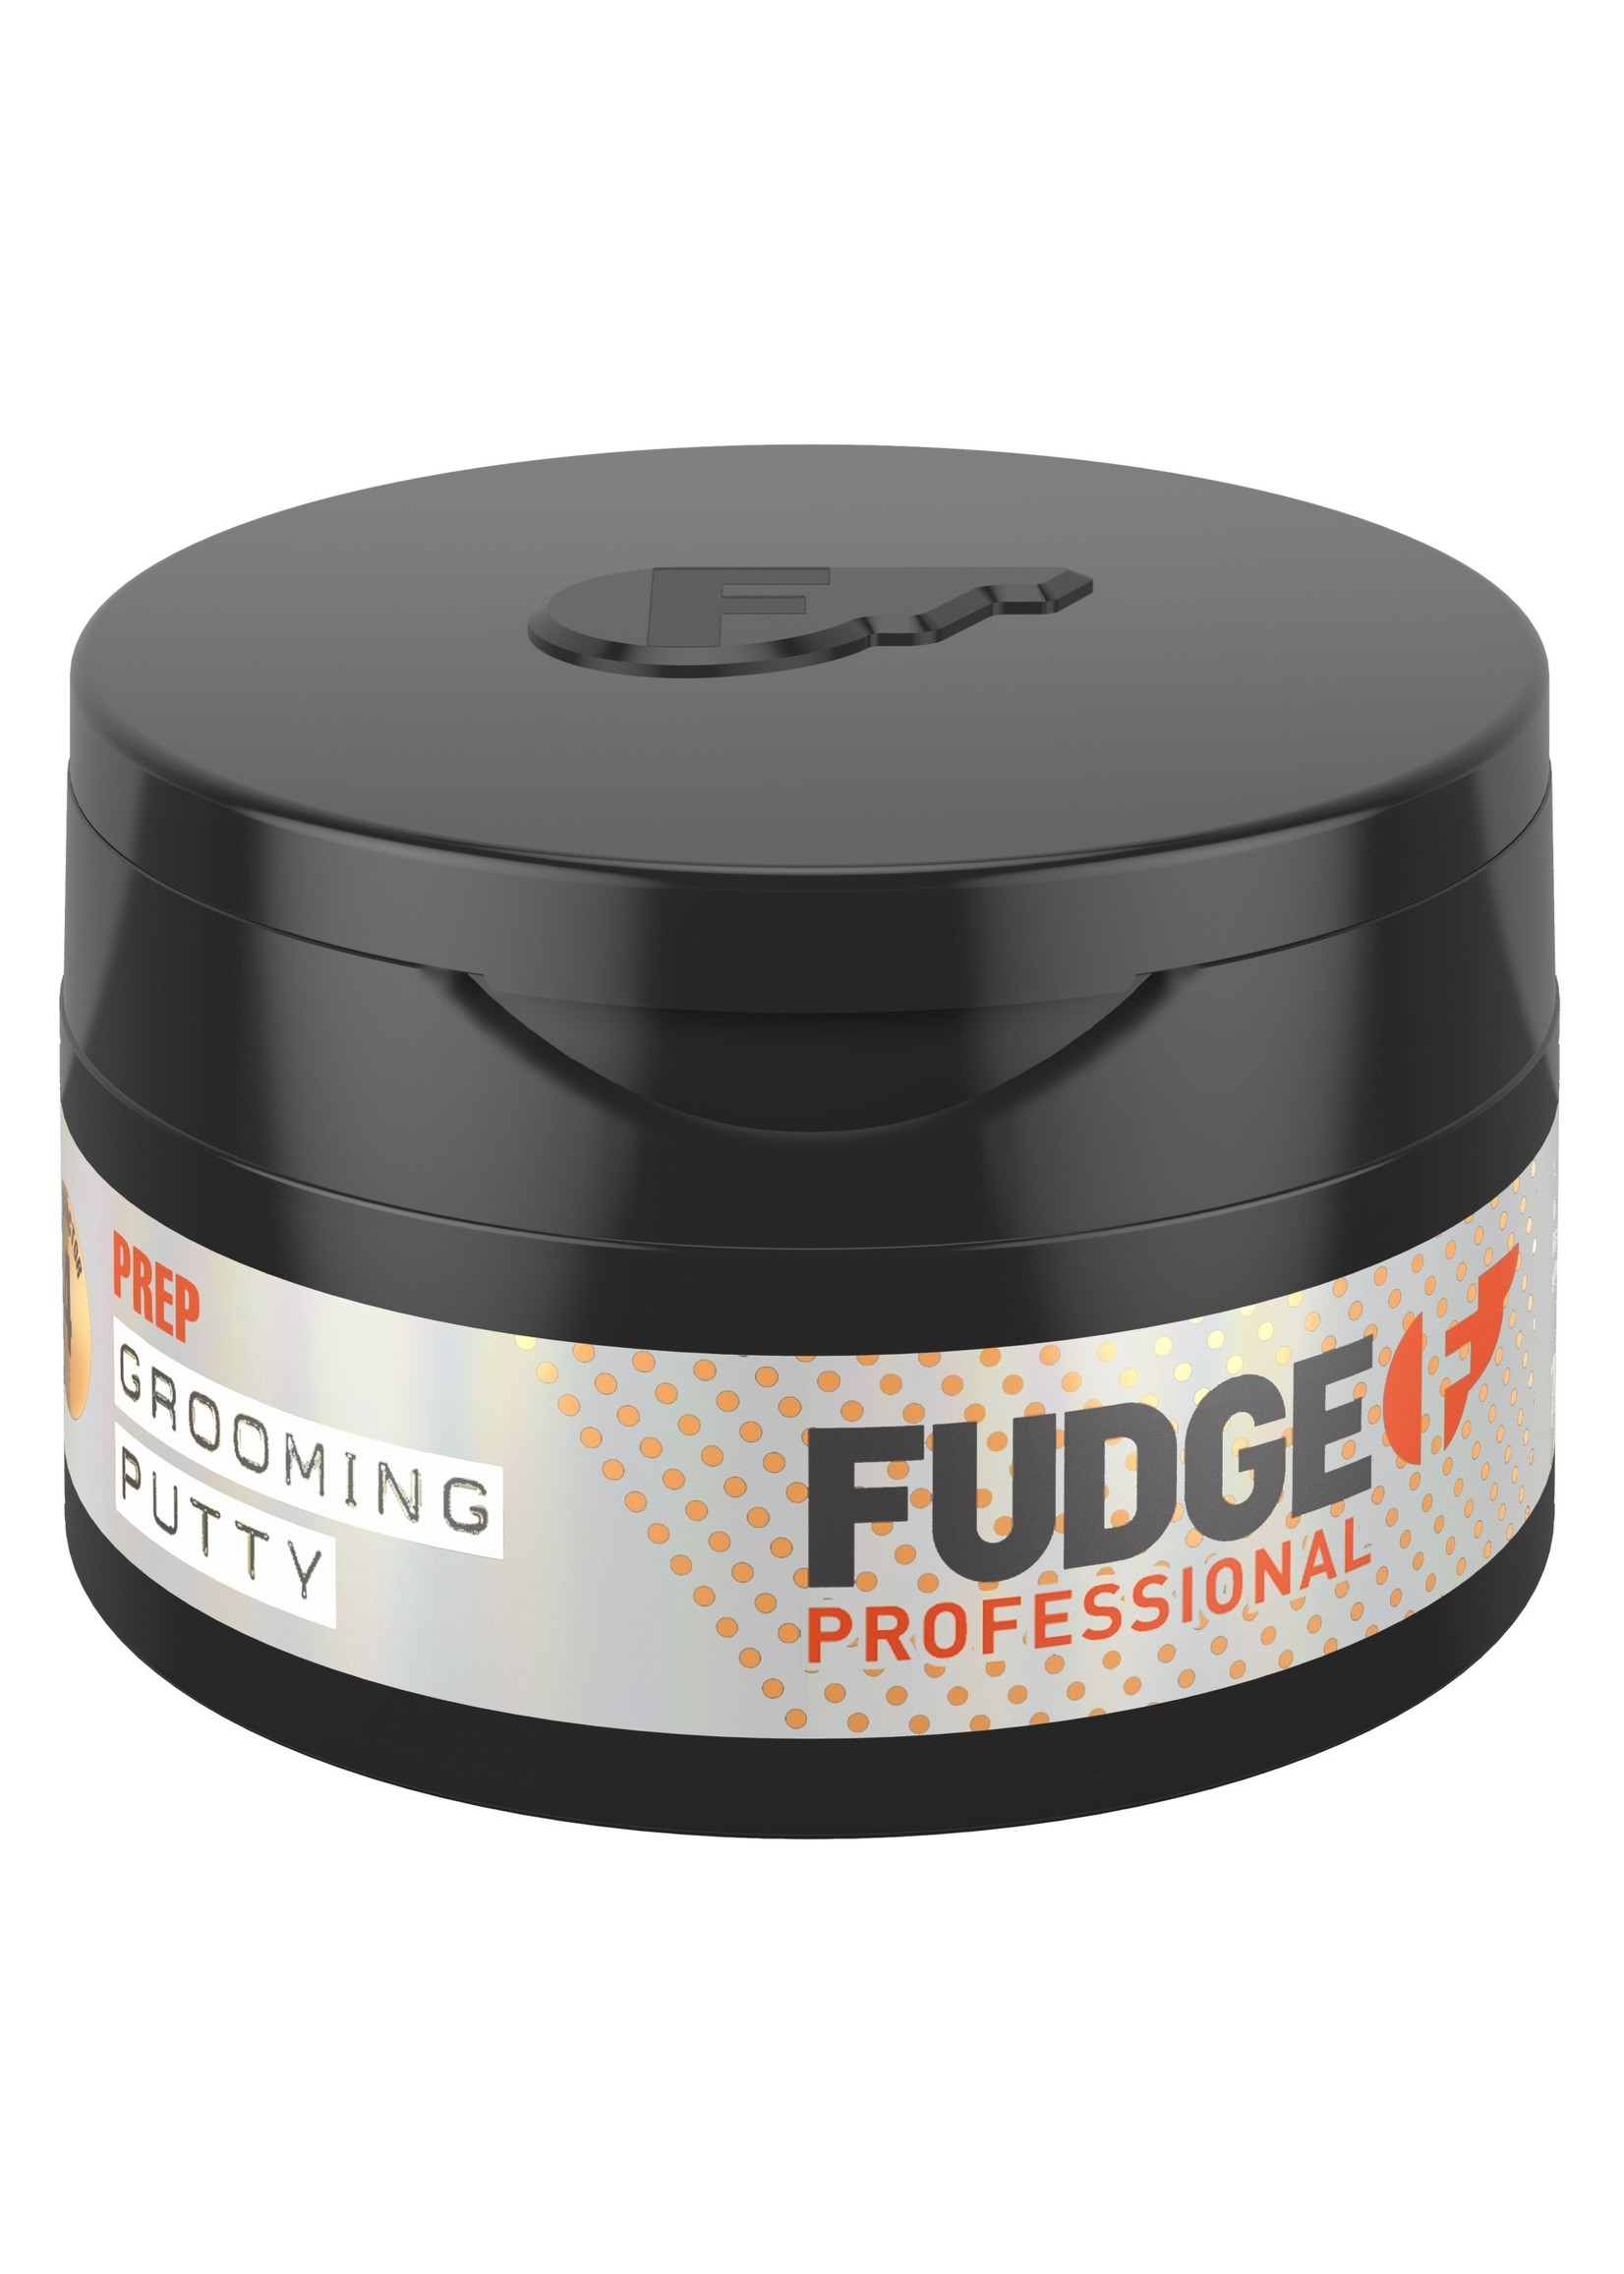 Fudge Fudge Grooming Putty 75g